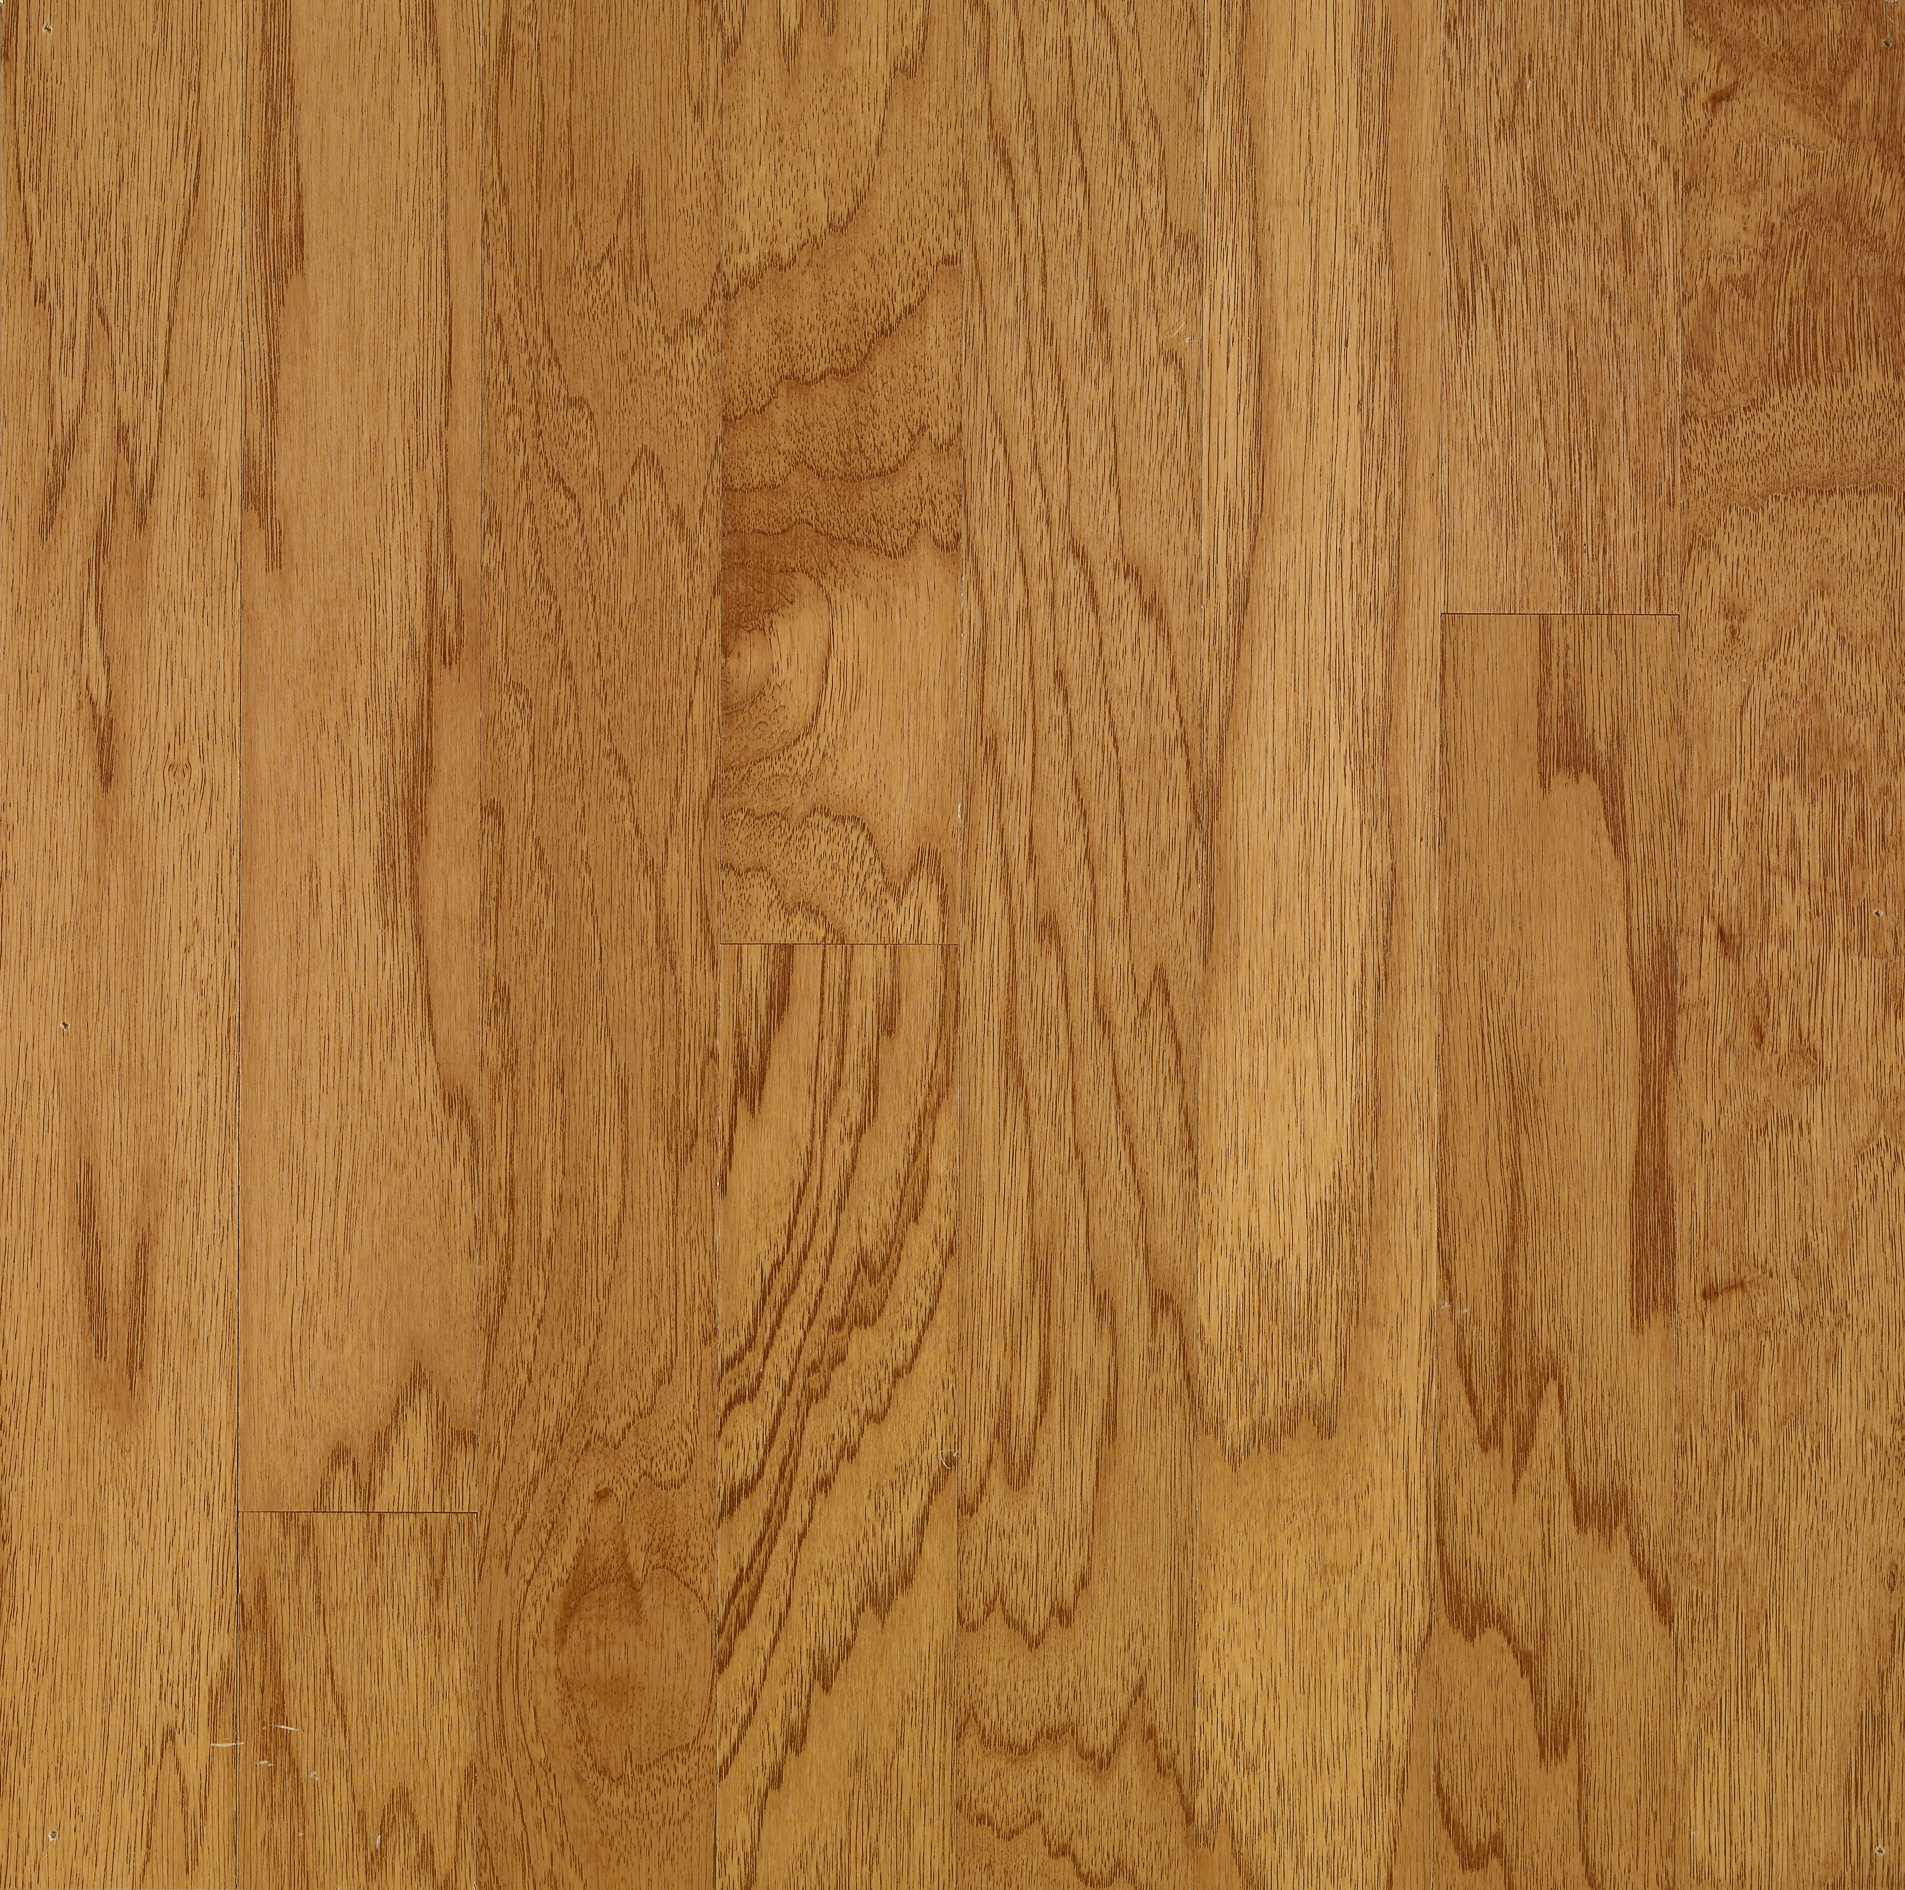 Hickory Solid Hardwood C4778, Bruce Hardwood Floor Hickory